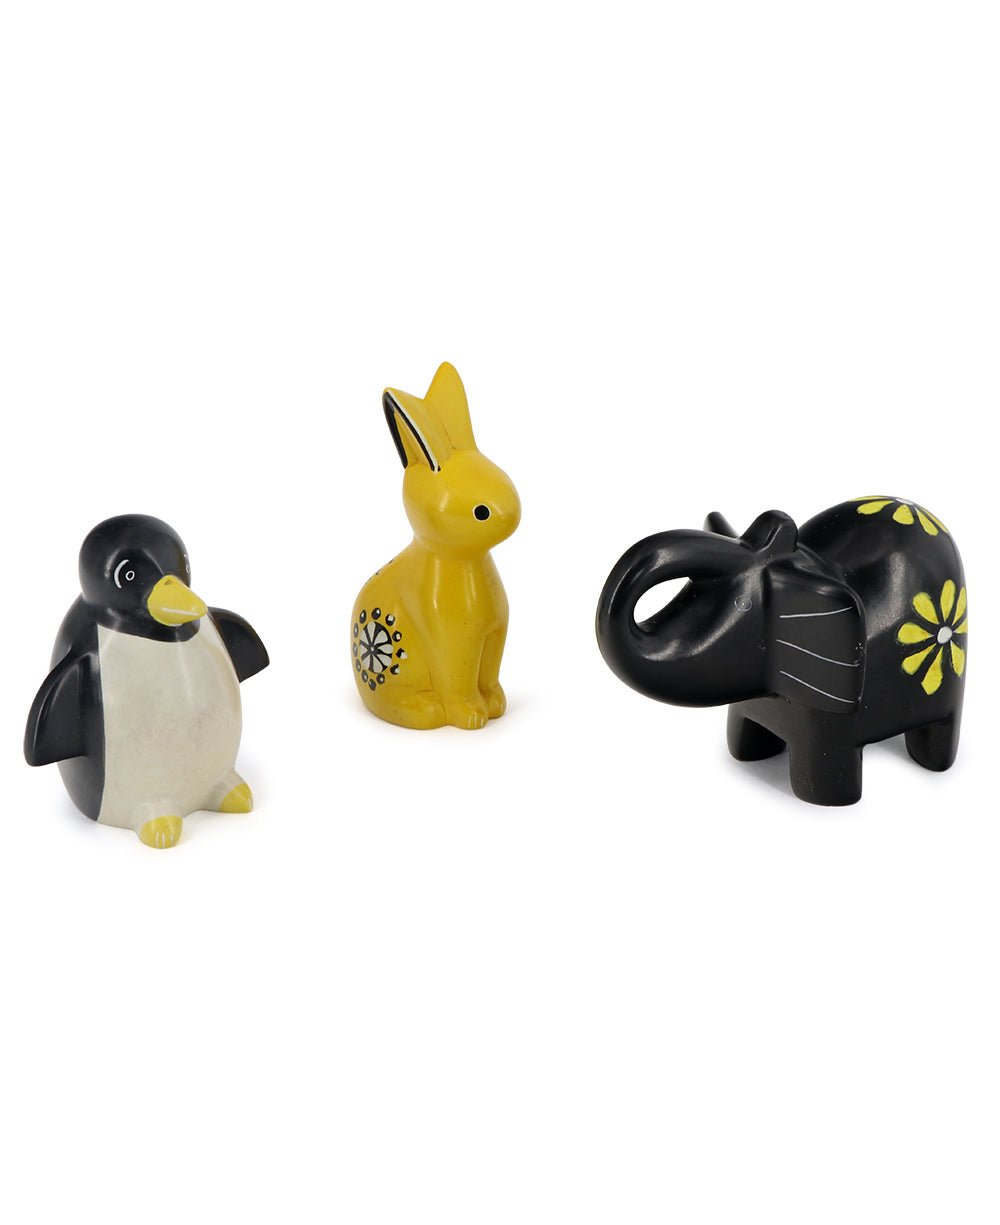 Miniature Set of 3 Soapstone Animal Figurines - Sculptures & Statues